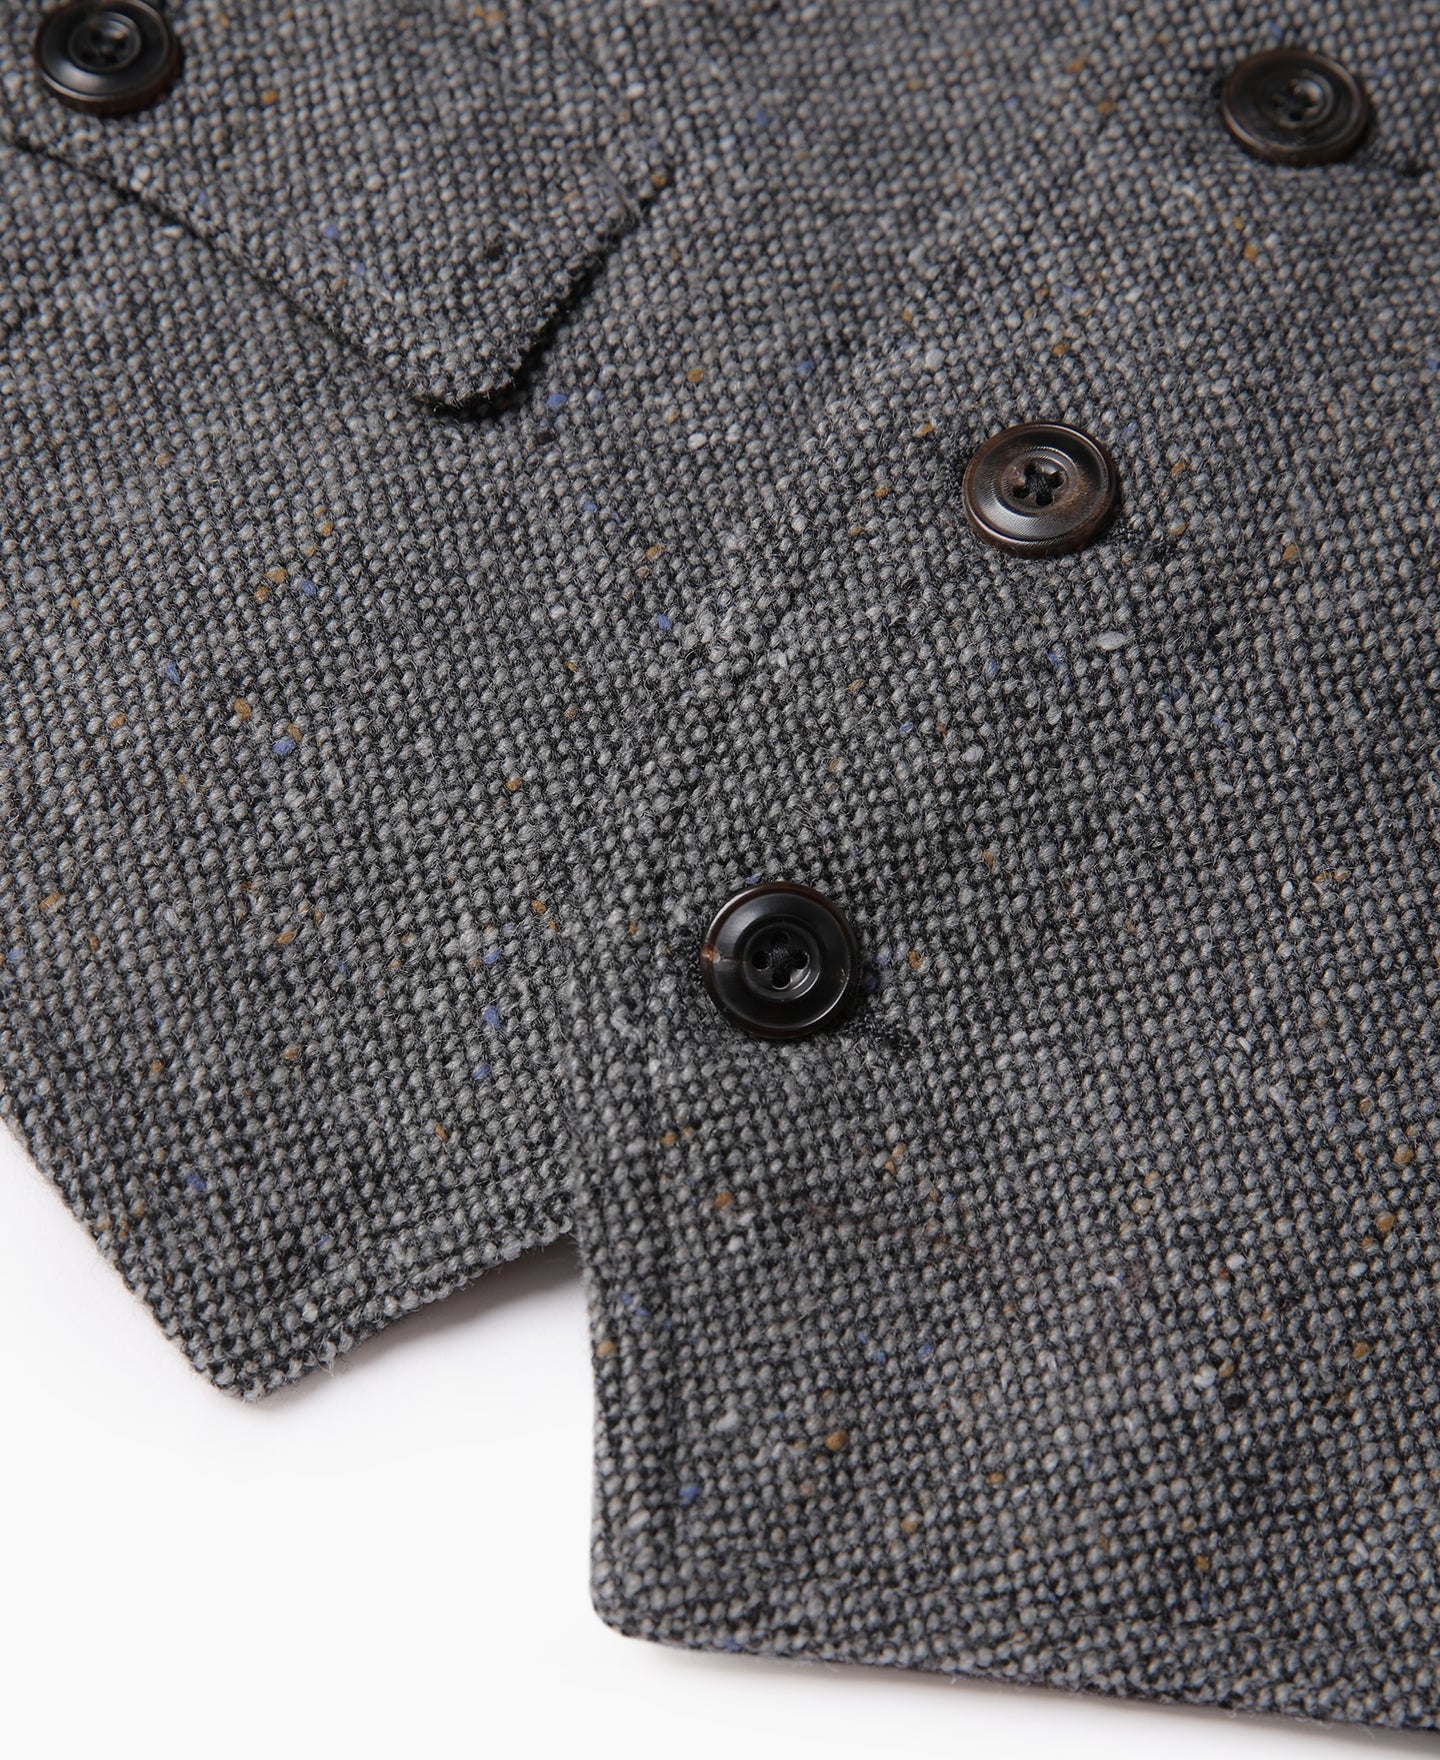 Coloured Speckle Tweed Safari Vest, 100% Wool Hunting Waistcoat